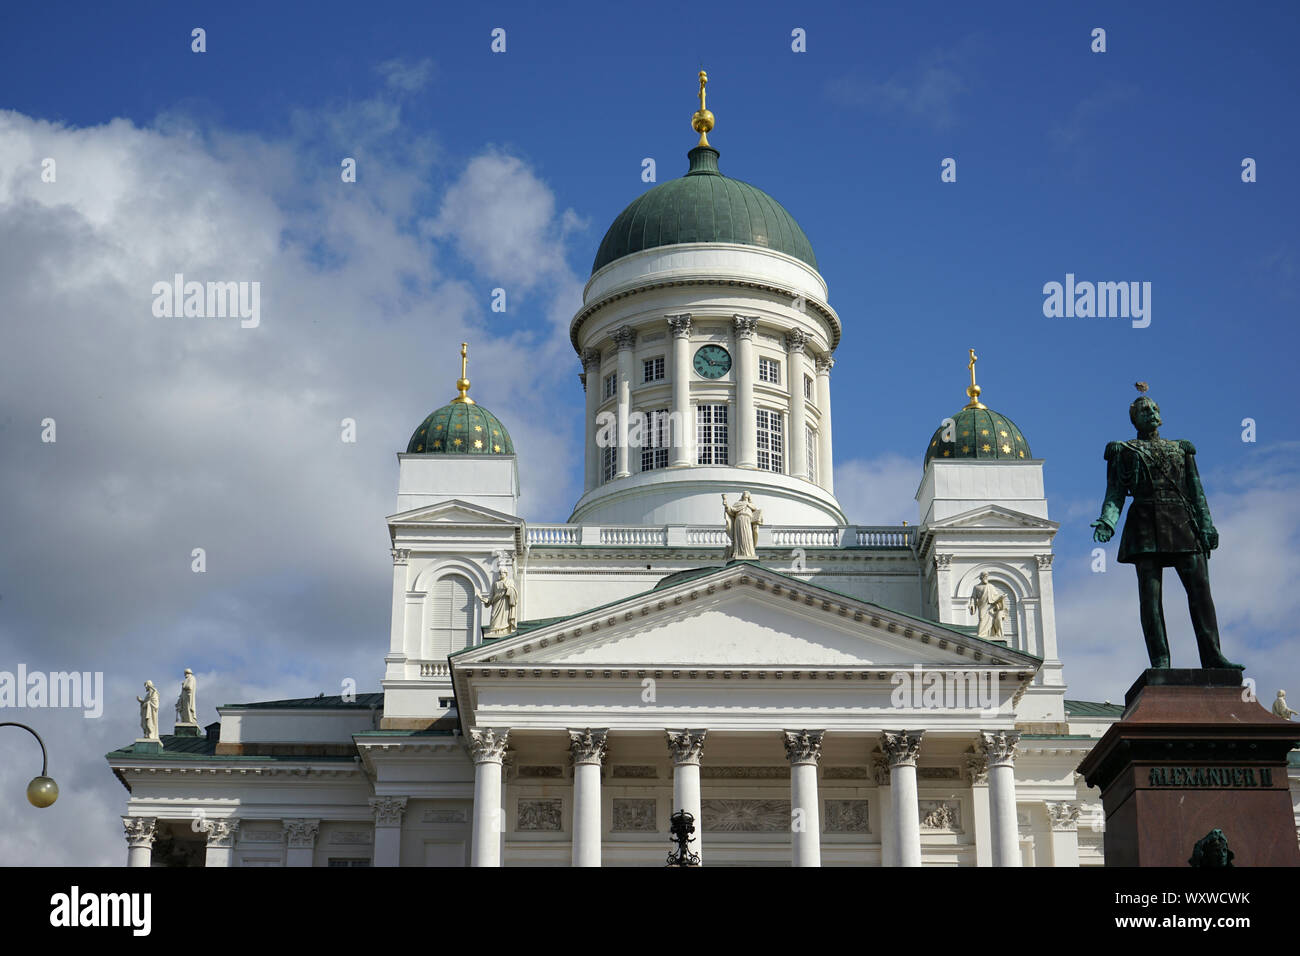 Dom von Helsinki, Alexander-II.-Denkmal Banque D'Images